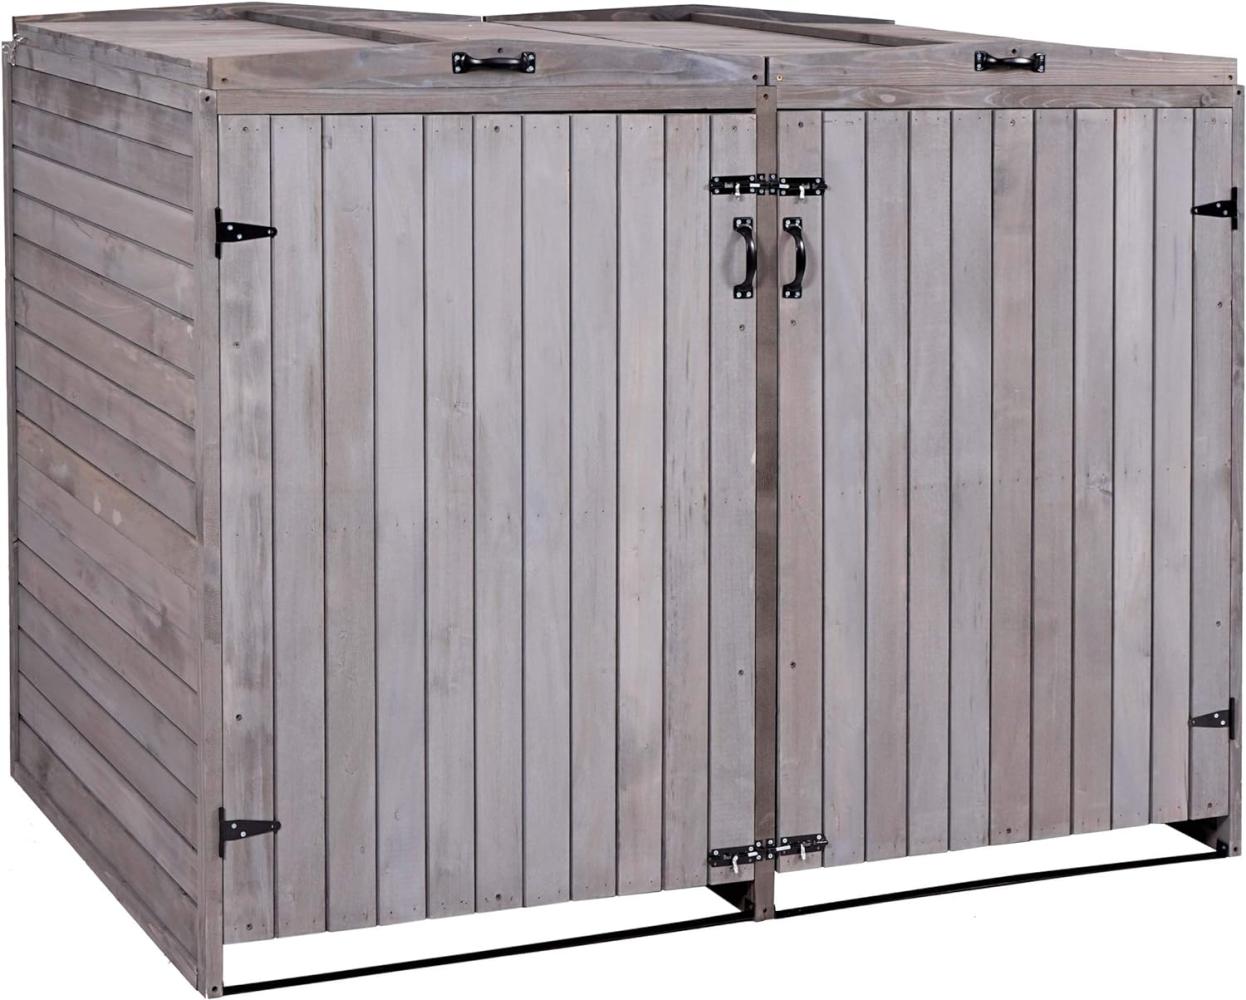 XL 2er-/4er-Mülltonnenverkleidung HWC-H74, Mülltonnenbox, erweiterbar 126x158x98cm Holz MVG ~ anthrazit-grau Bild 1